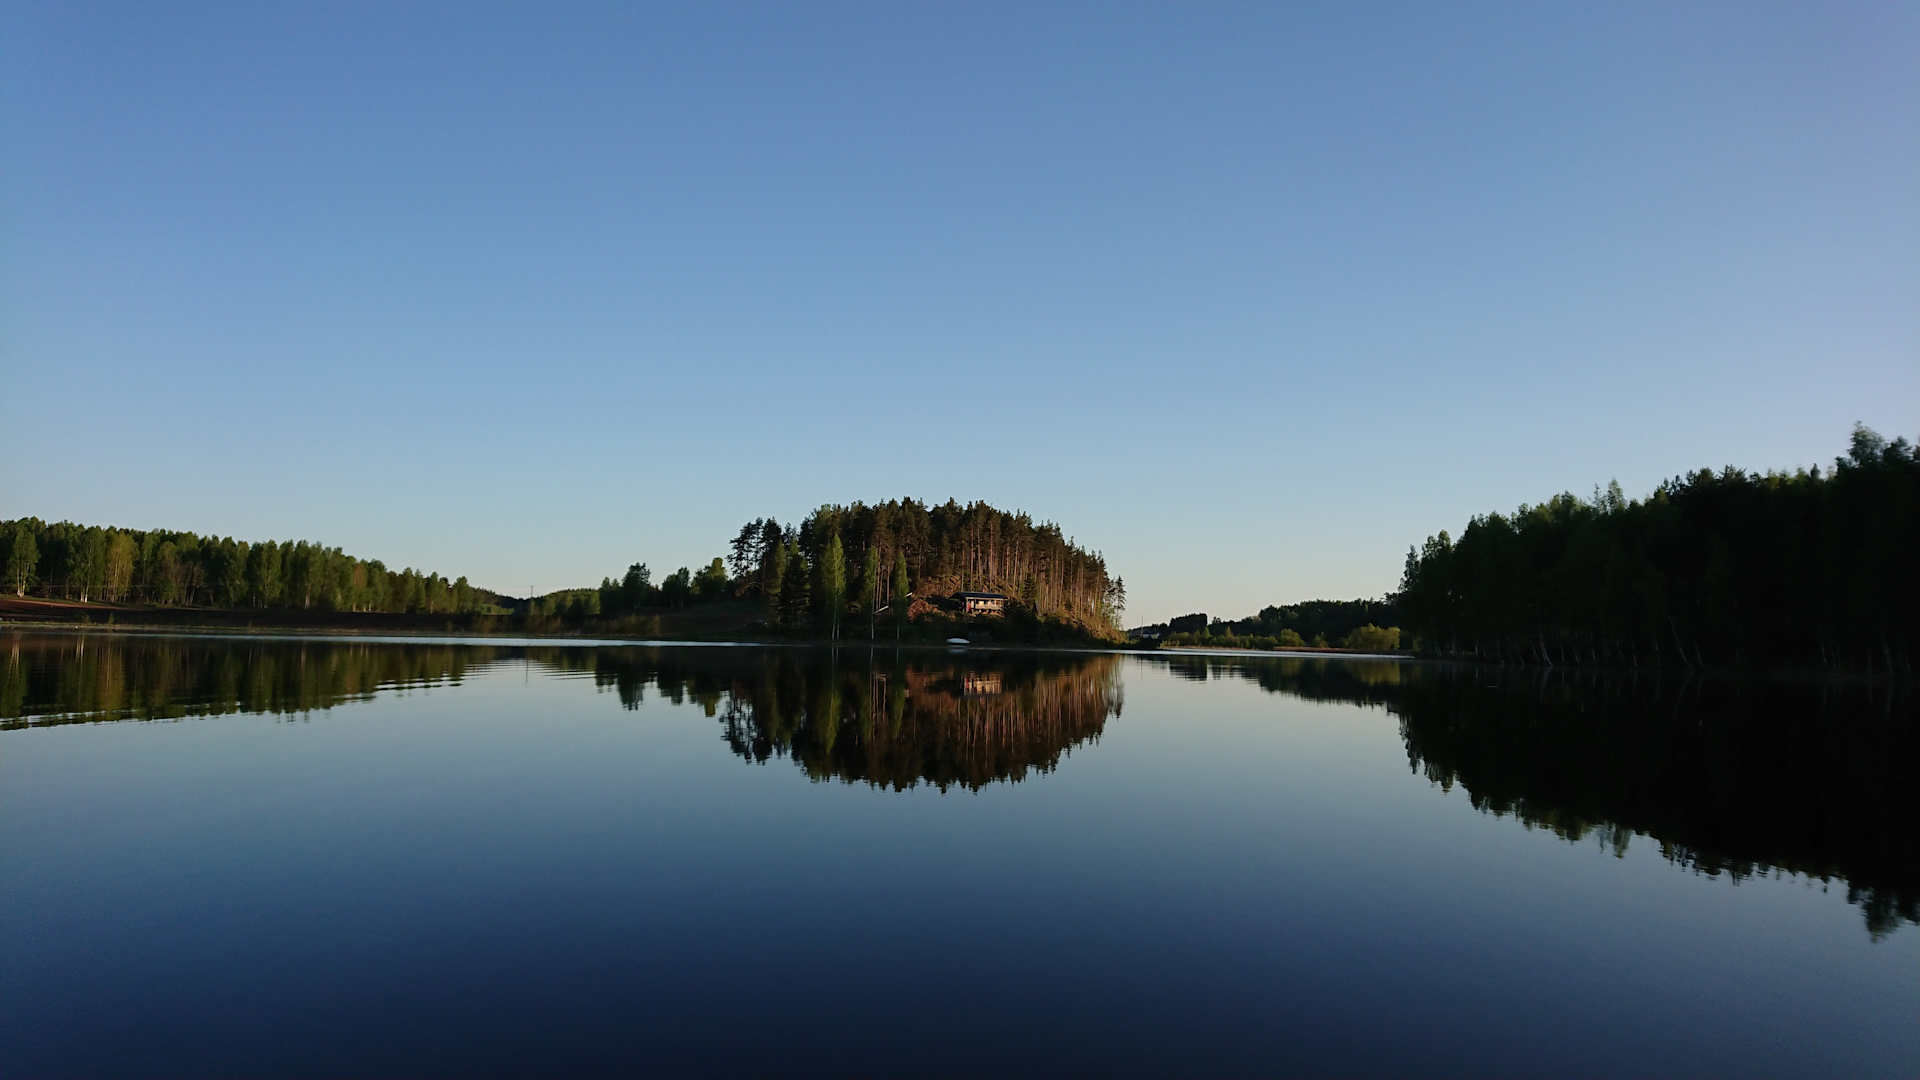 Финское озеро 5 букв. Оз Сайма Финляндия. Озерное плато Финляндии. Финское озеро Парголово. Финское озеро Парголово рыбалка.